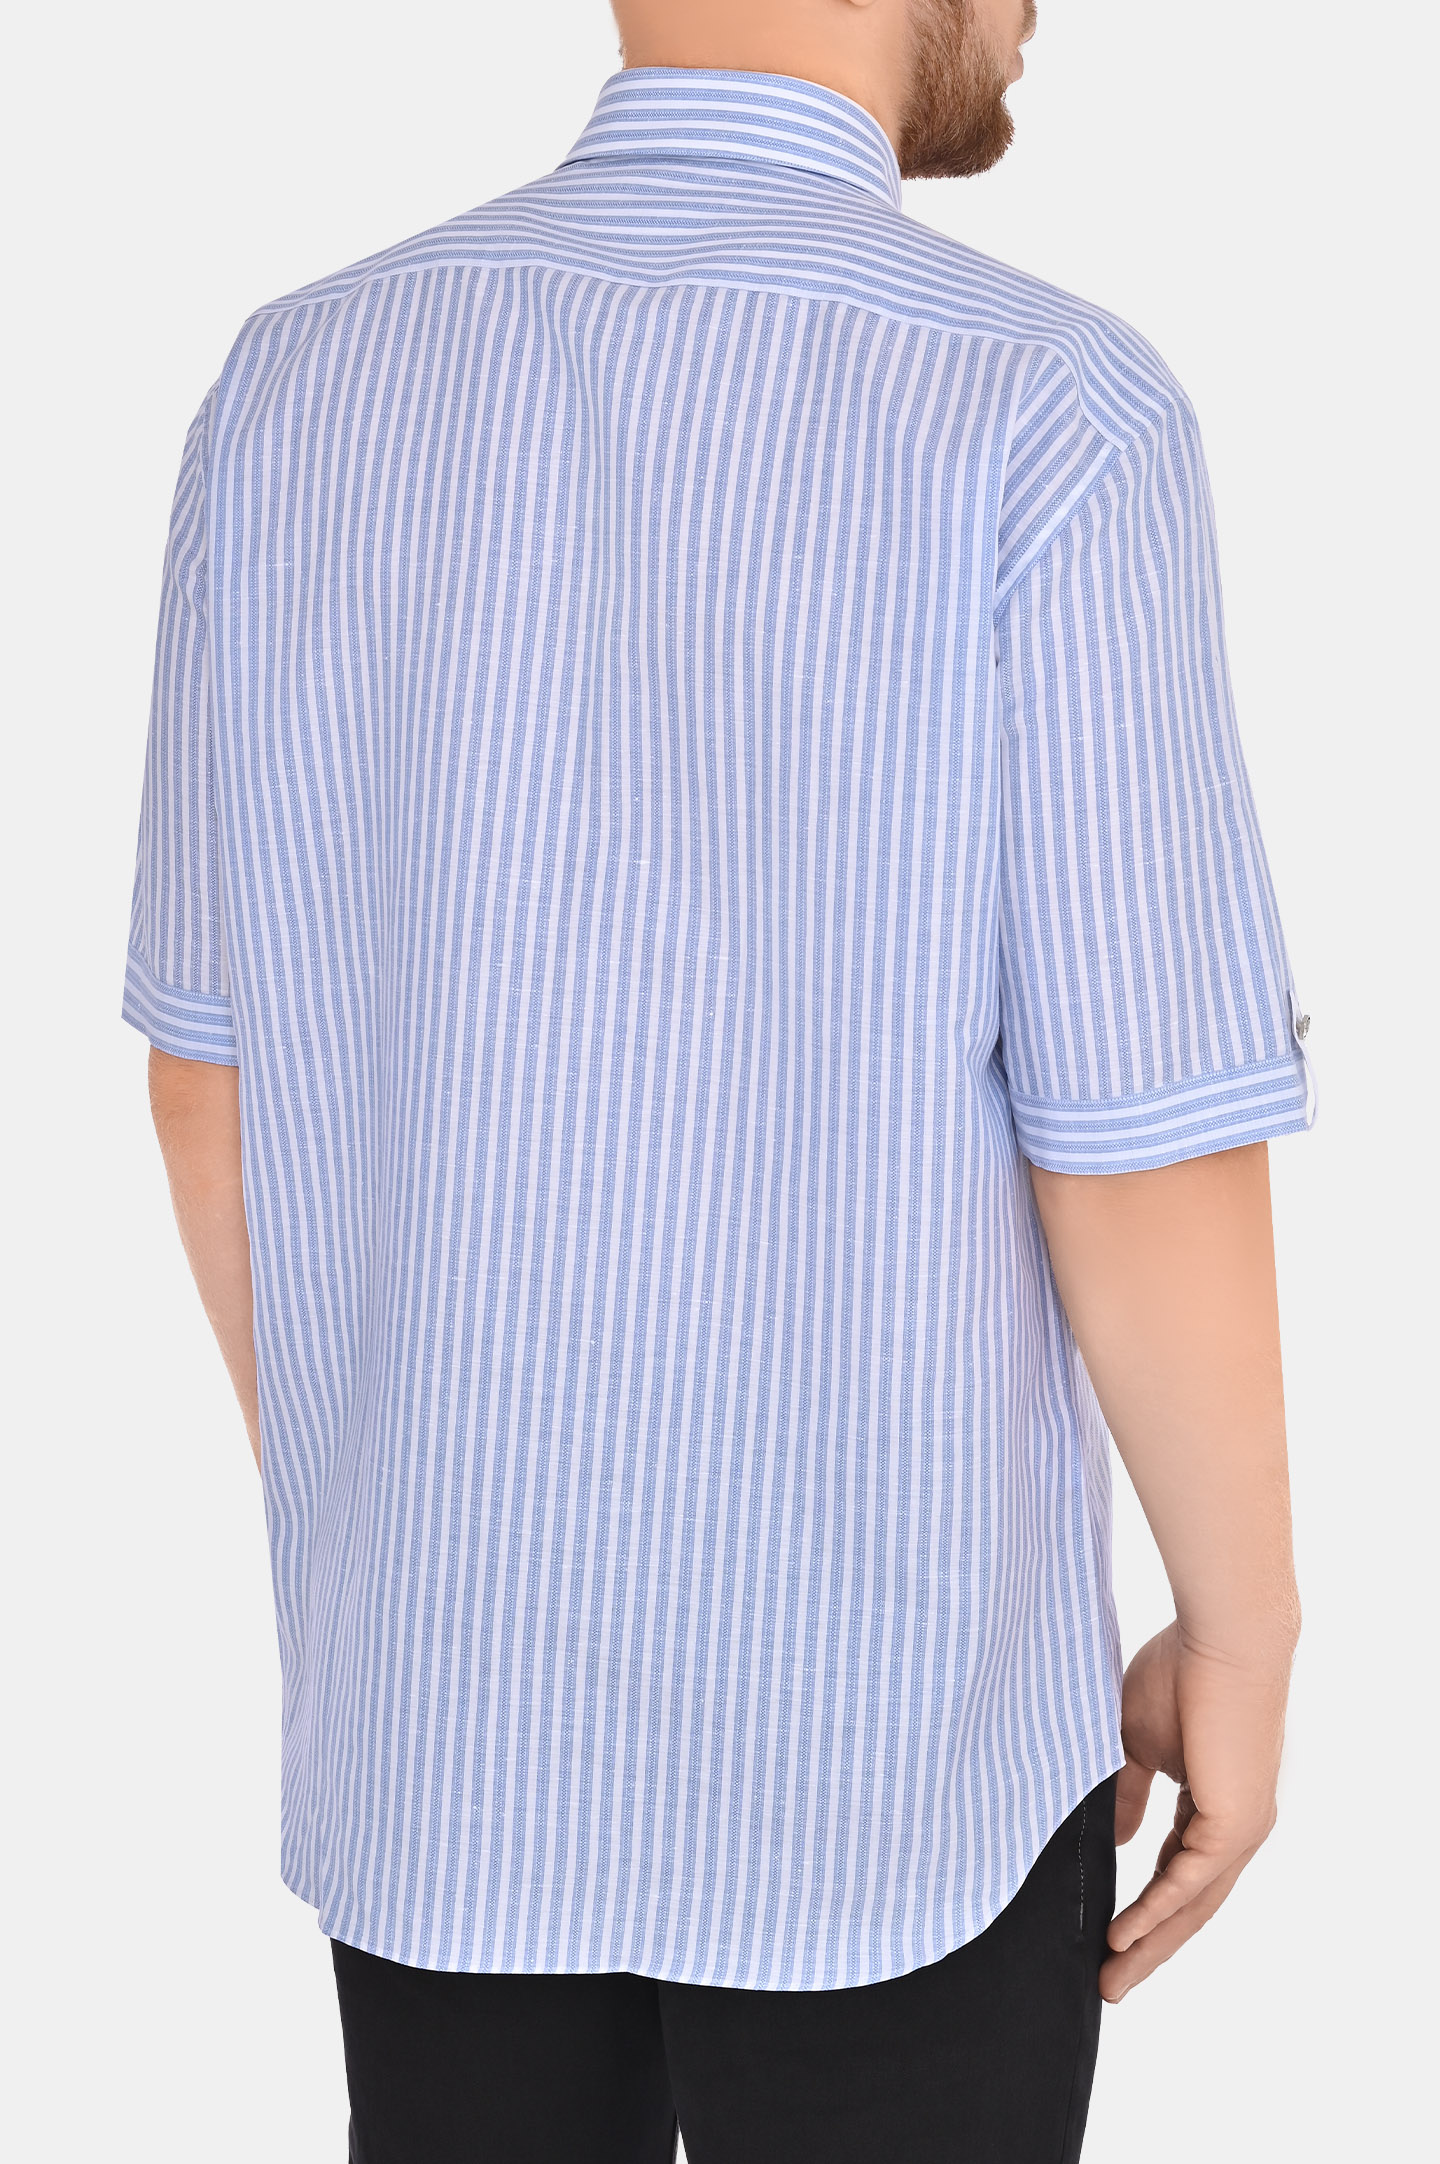 Рубашка STEFANO RICCI MC006729 R1258, цвет: Голубой, Мужской